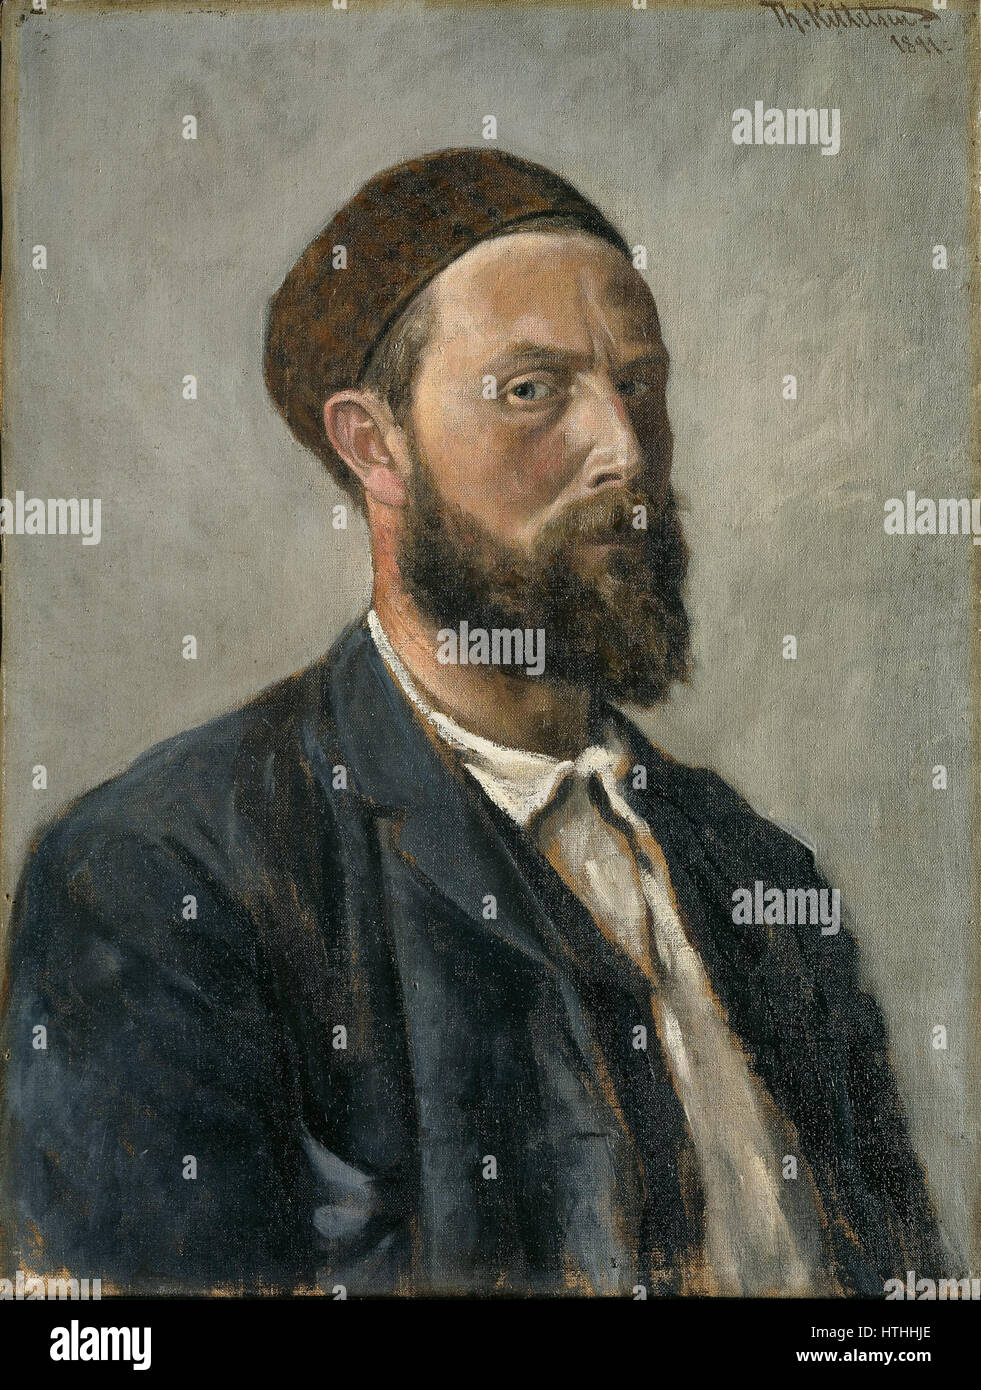 Theodor Kittelsen - Self-Portrait - Google Art Project Stock Photo